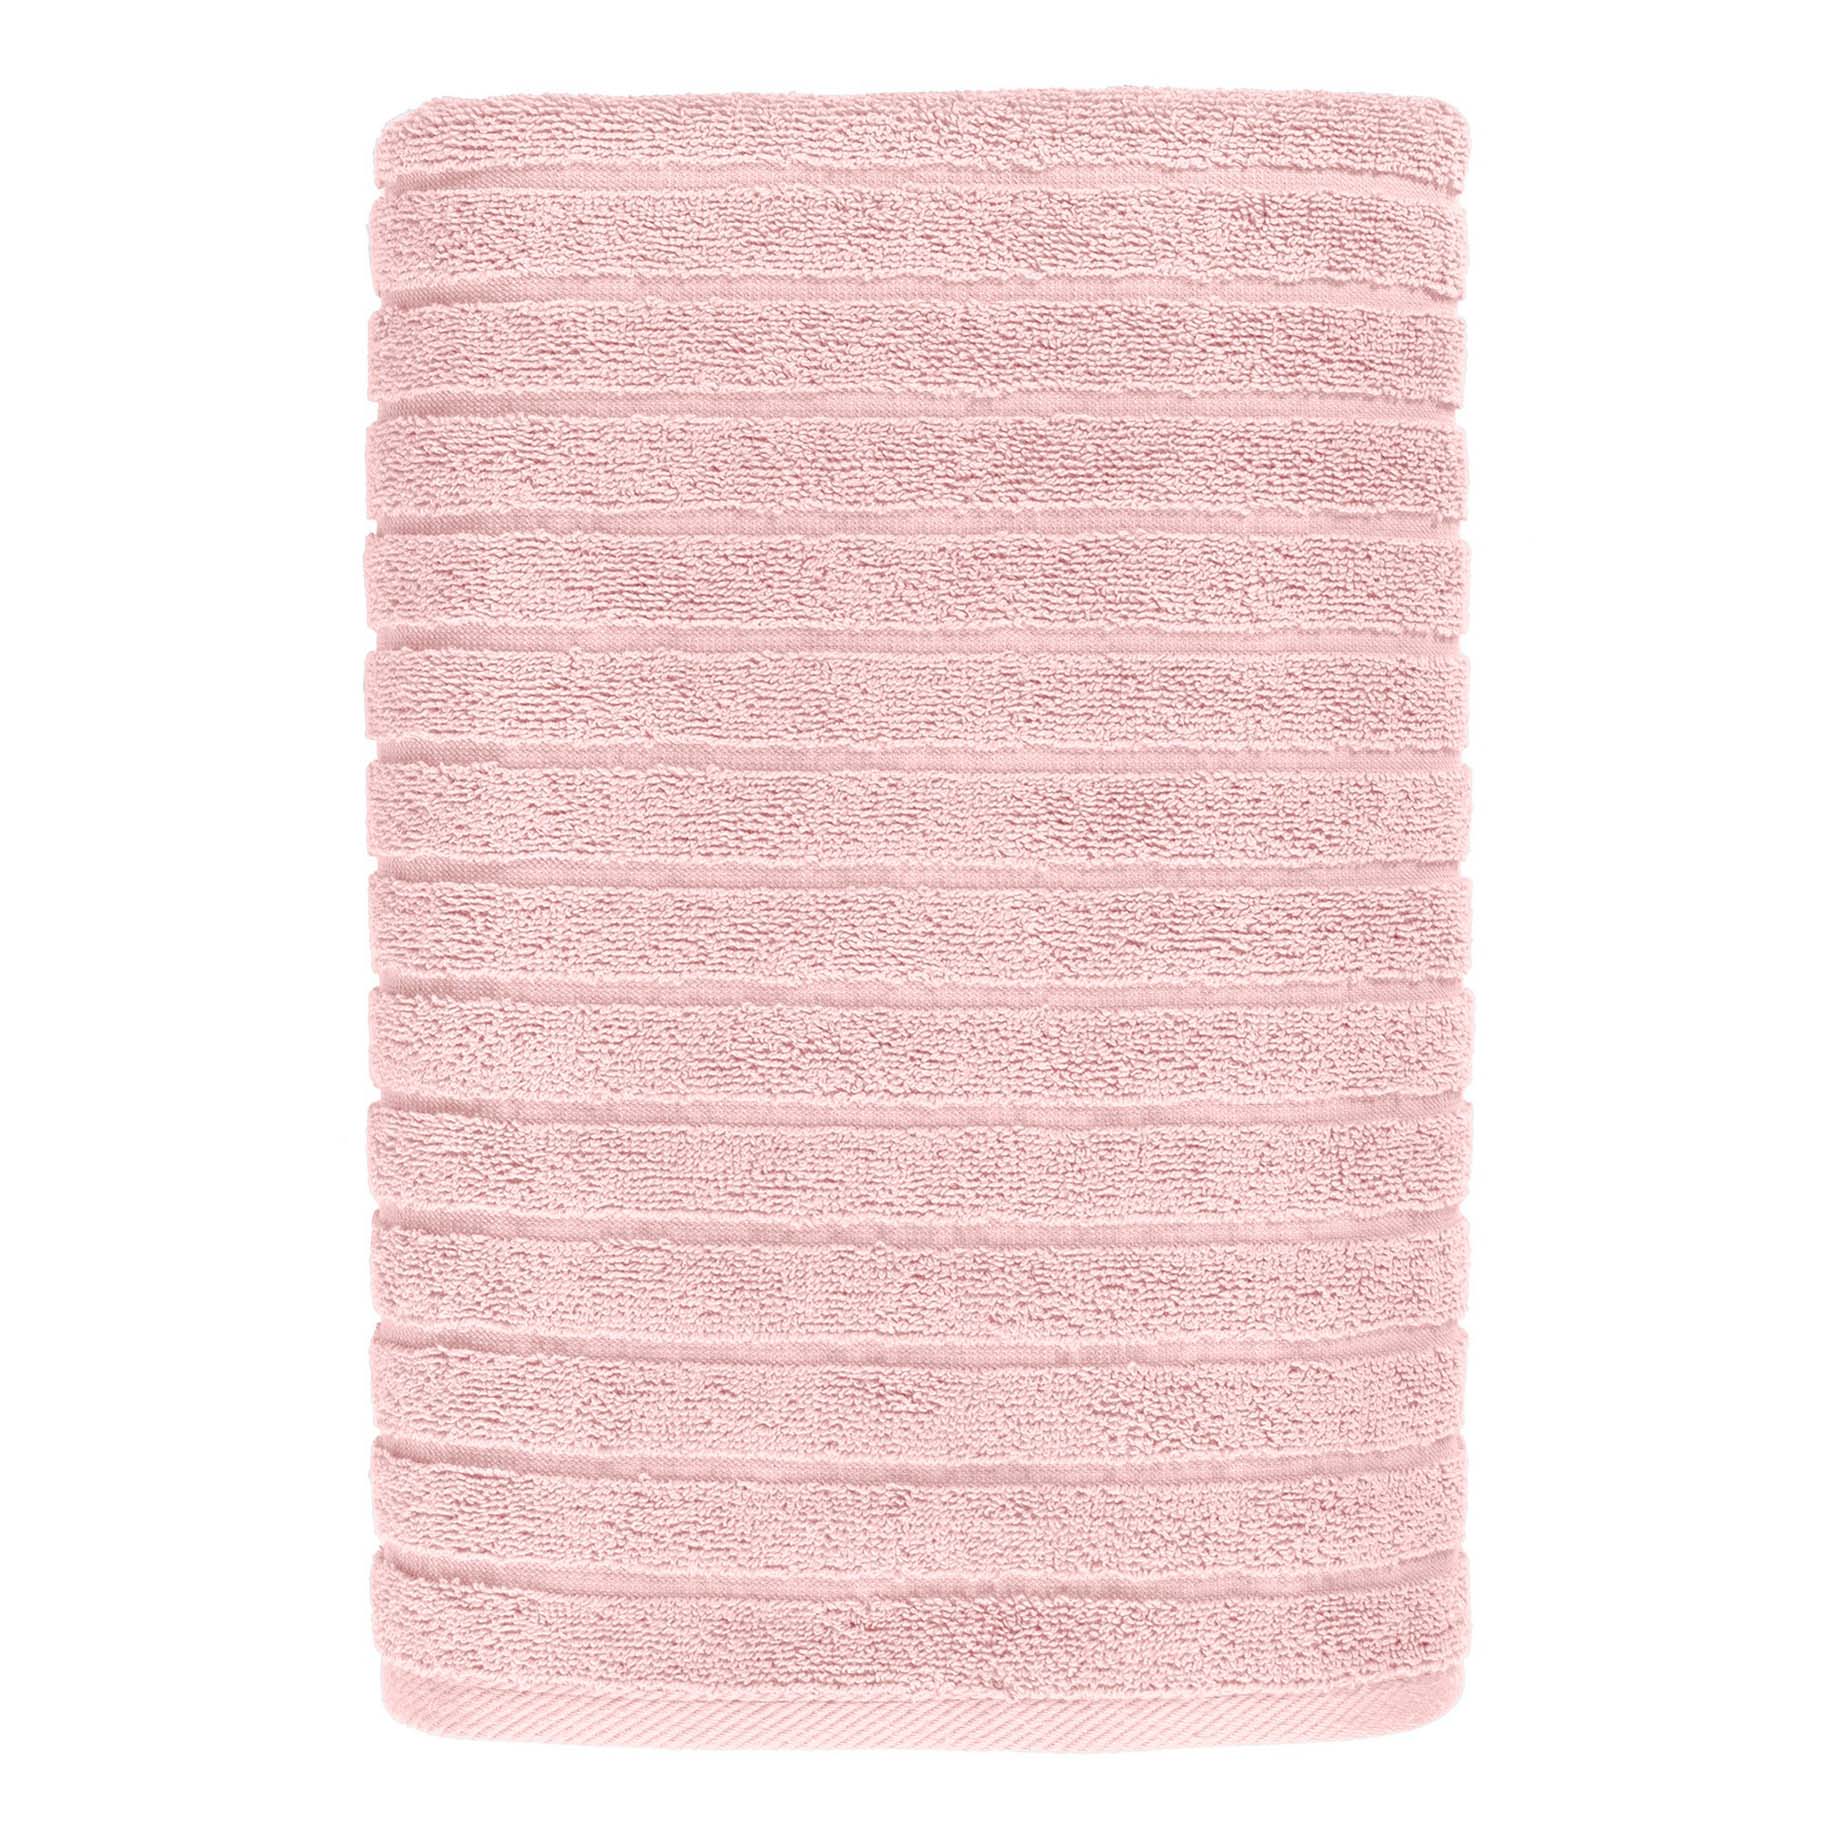 Полотенце Волшебная ночь 33 х 70 см махровое серебристо-розовое